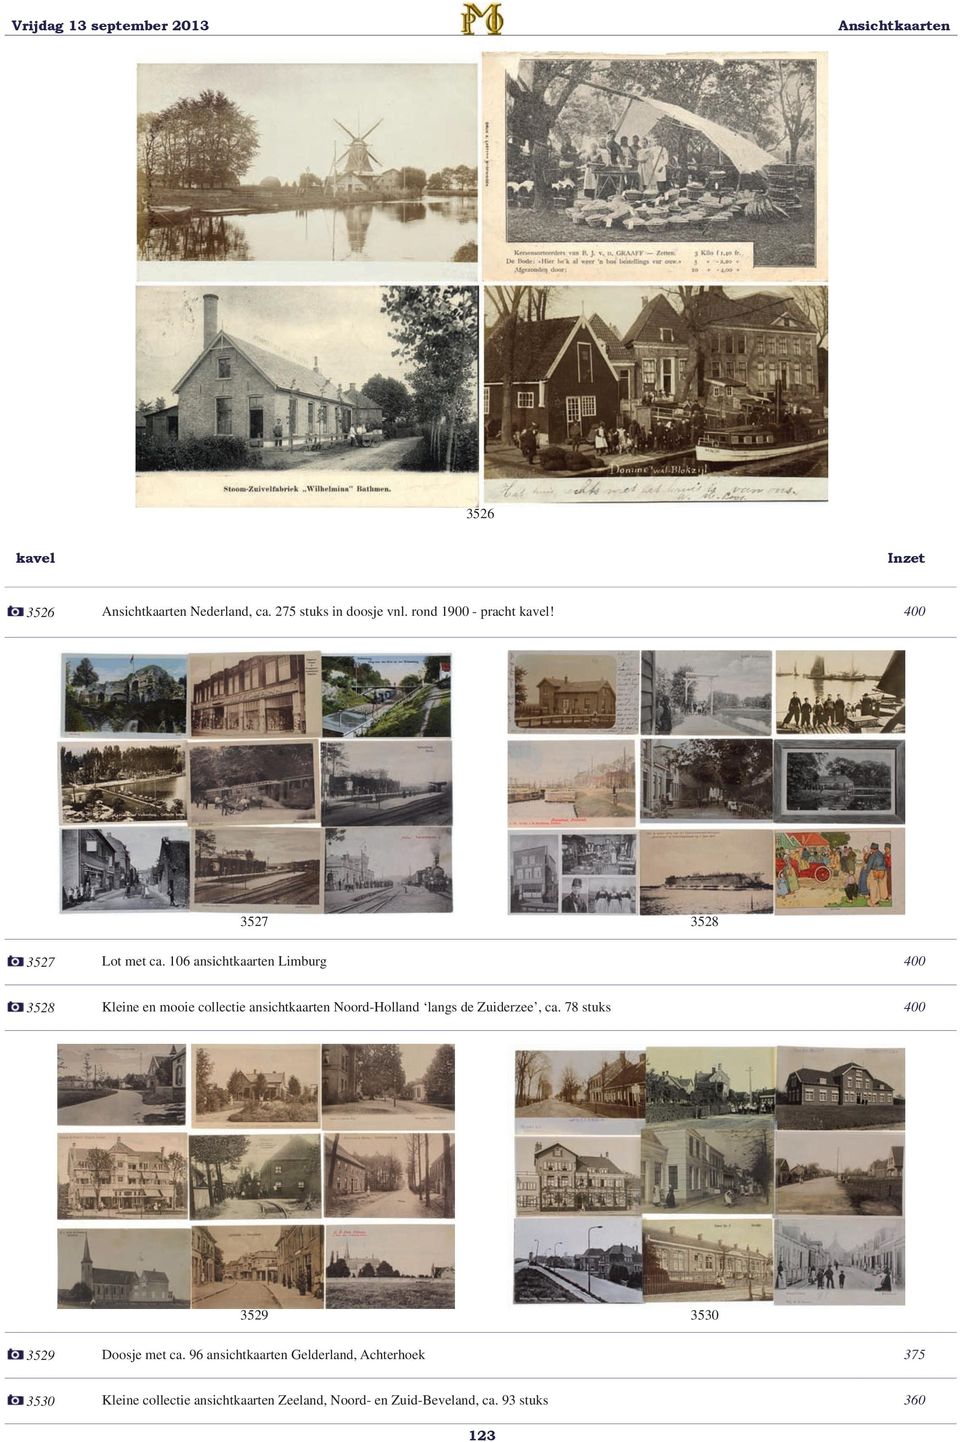 106 ansichtkaarten Limburg 400 3528 Kleine en mooie collectie ansichtkaarten Noord-Holland langs de